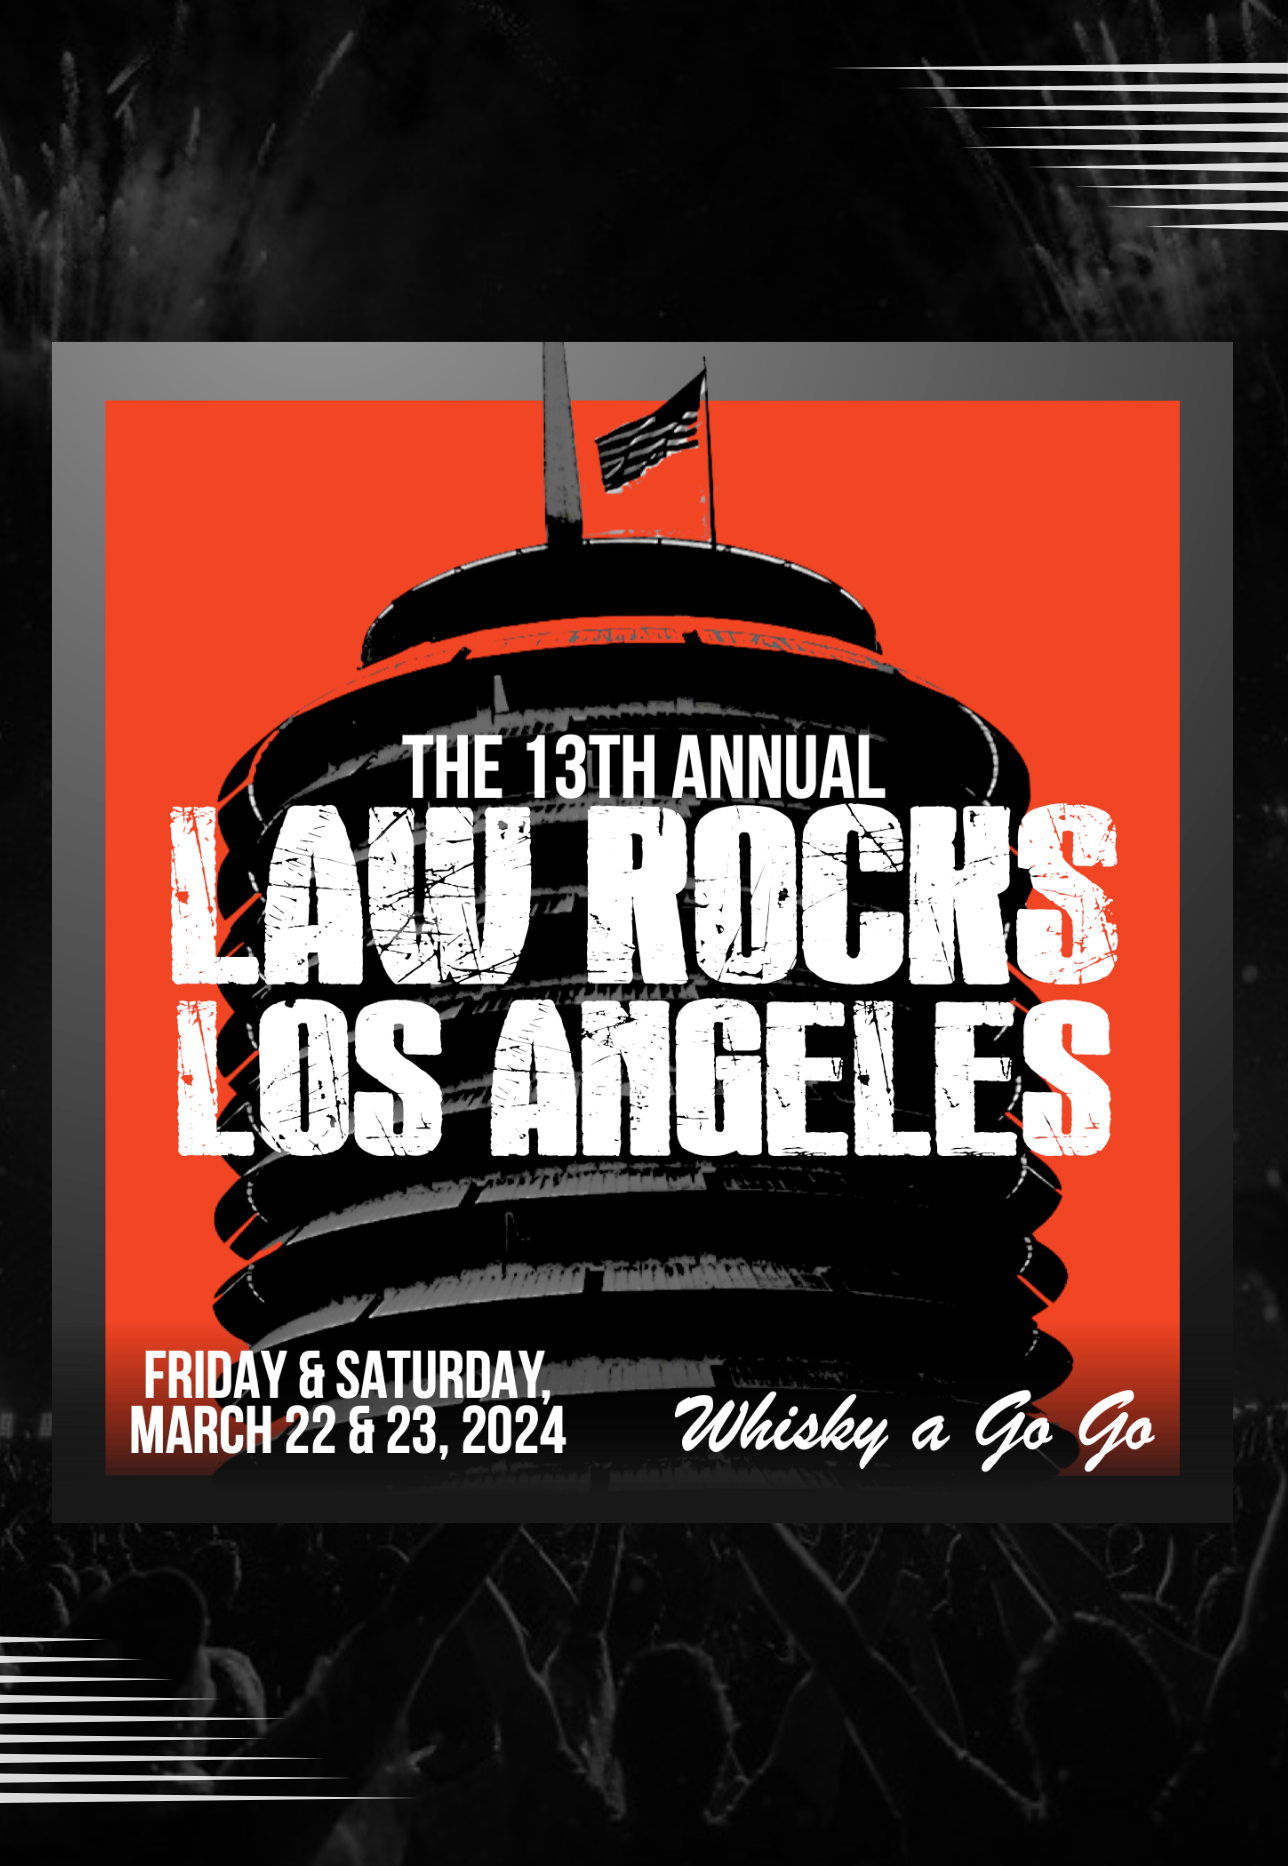 The 13th annual LAW ROCKS Los Angeles